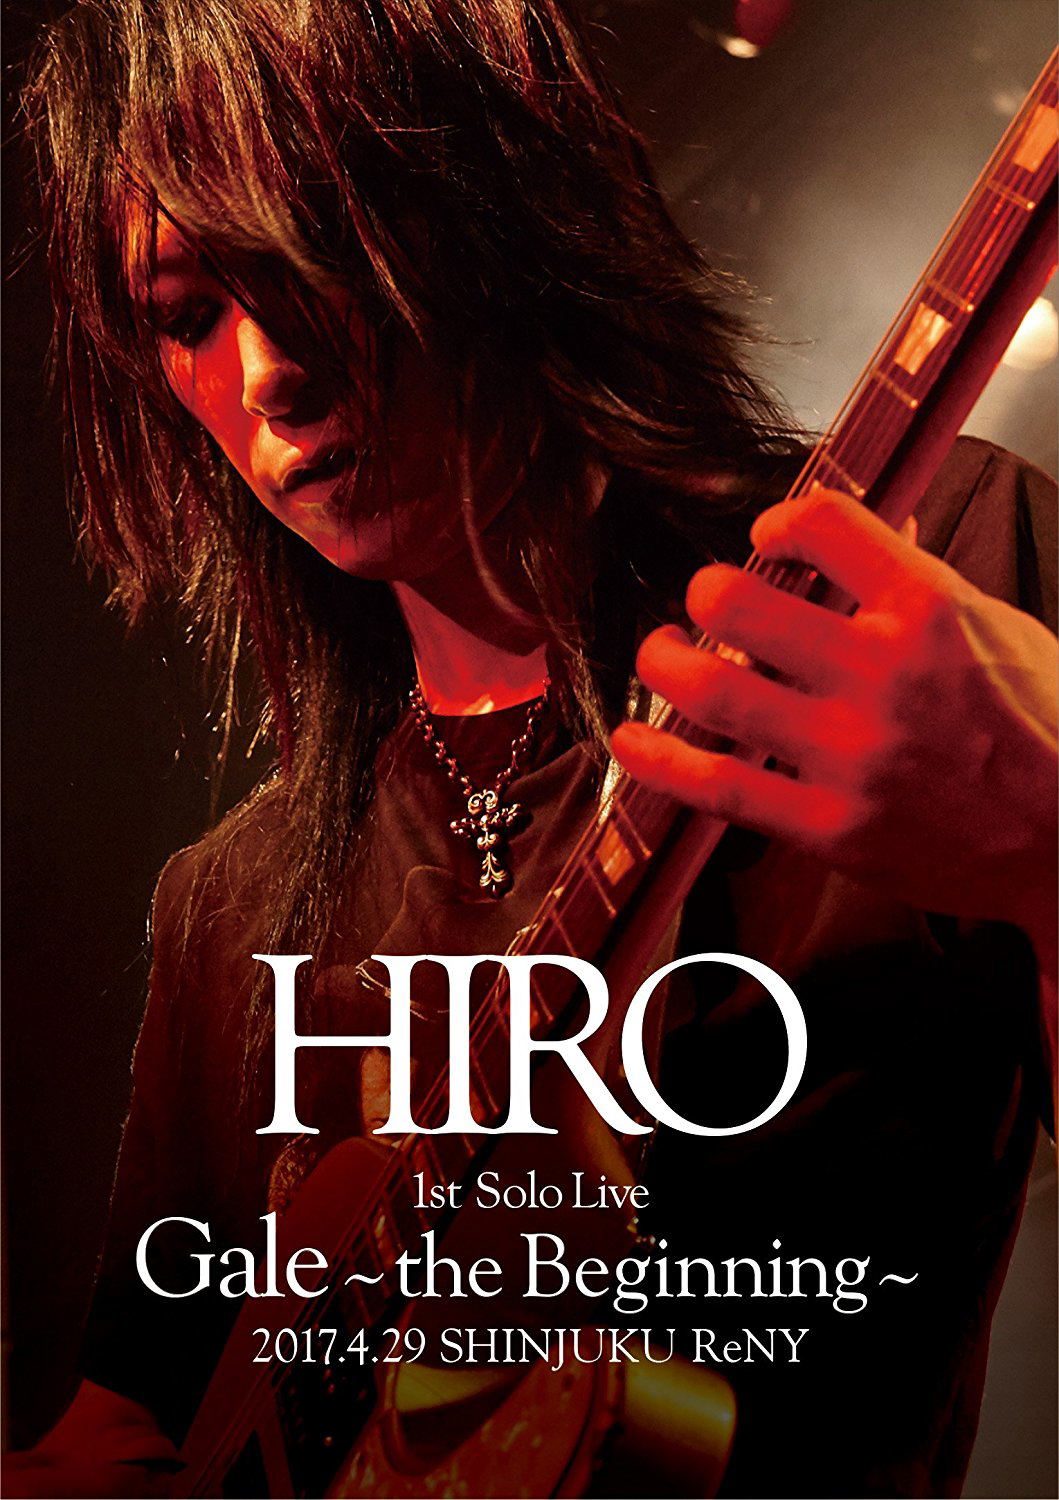 Hiro 1st Solo Live Gale - The Beginning - 2017.4.29 Shinjuku Reny